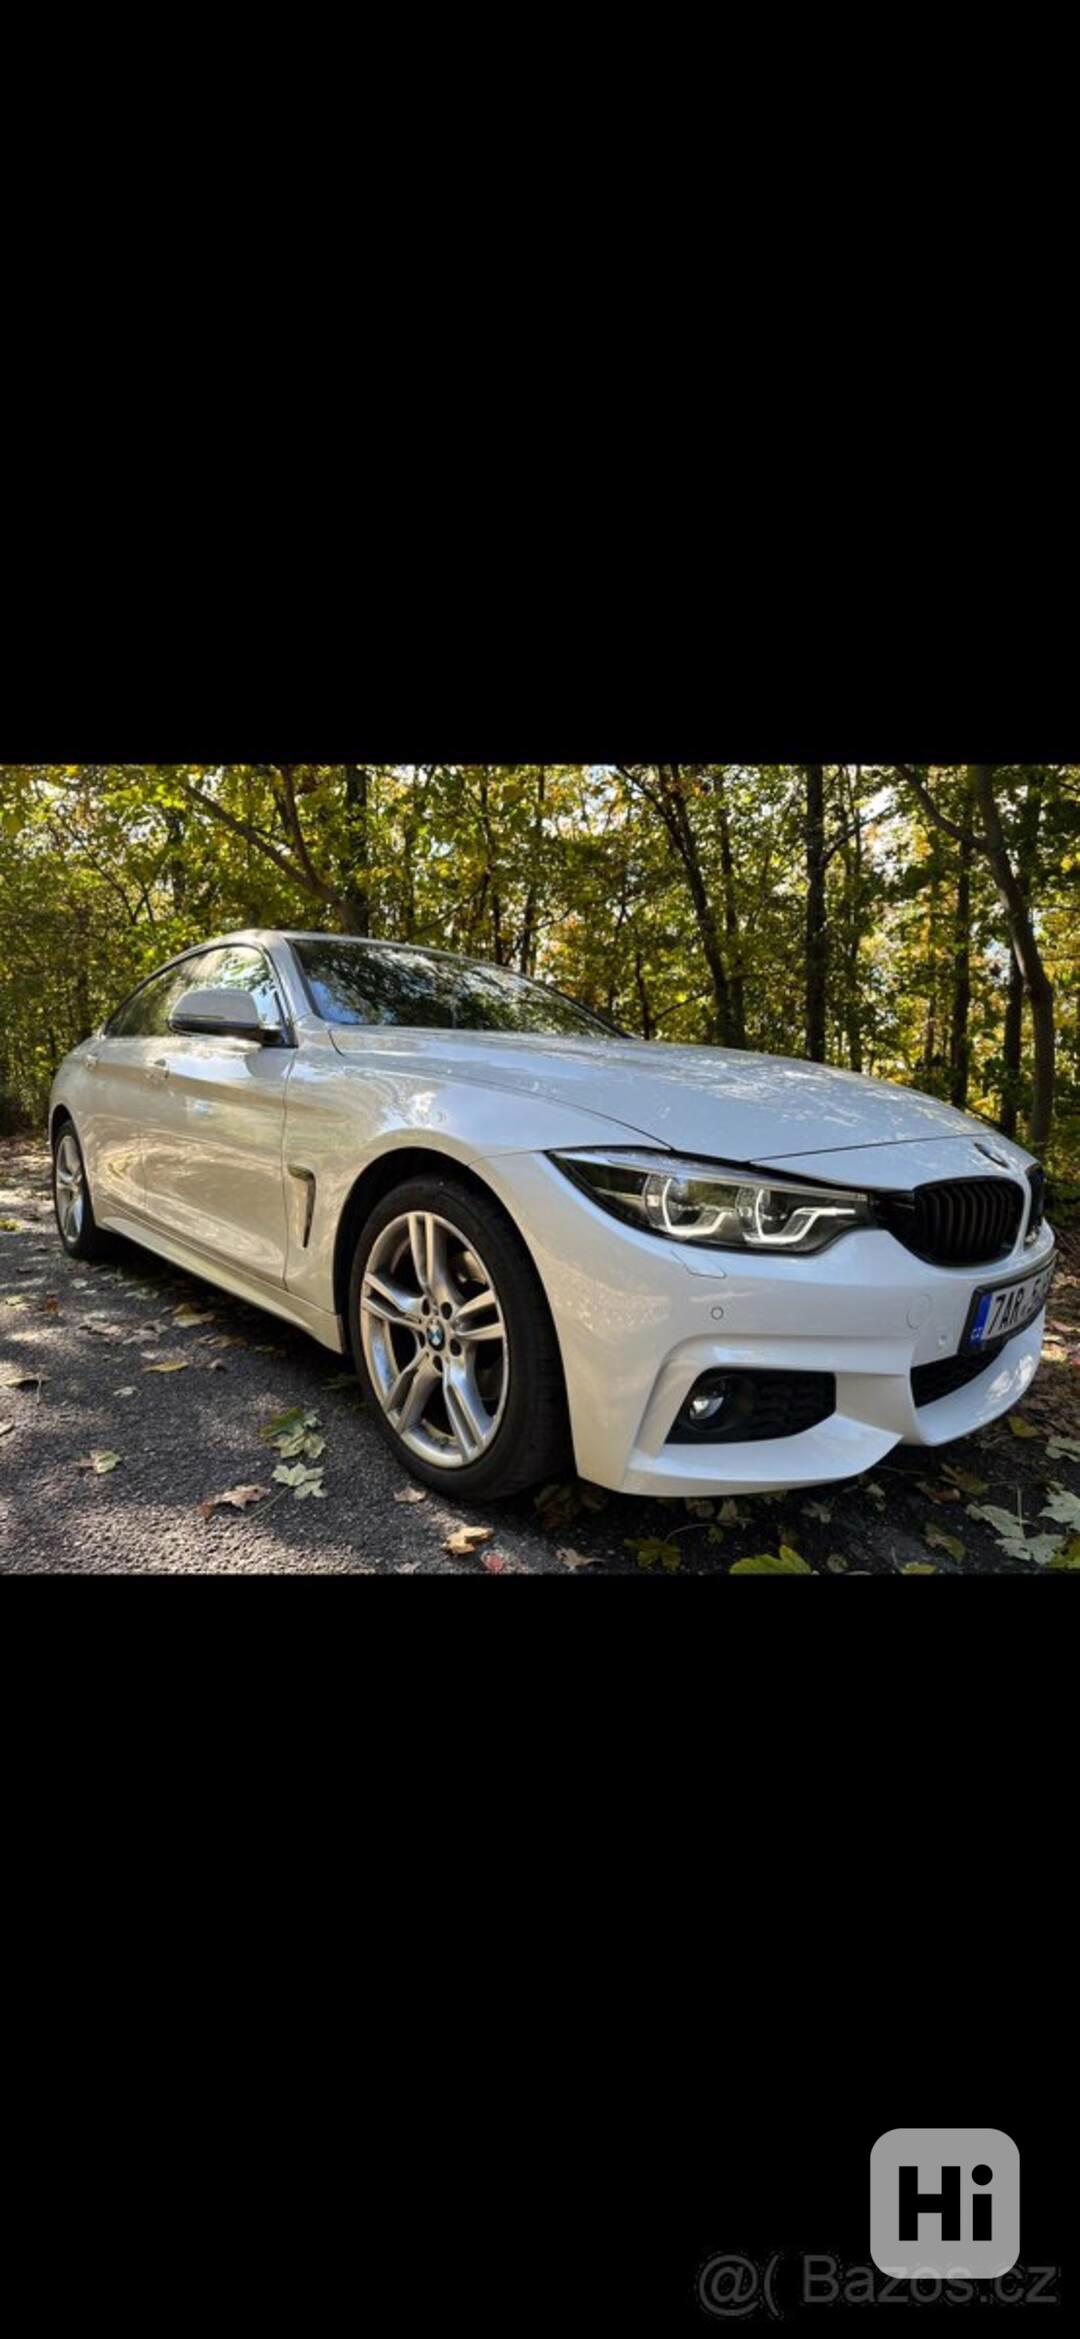 BMW 420d xDrive r.v. 2019 - foto 1